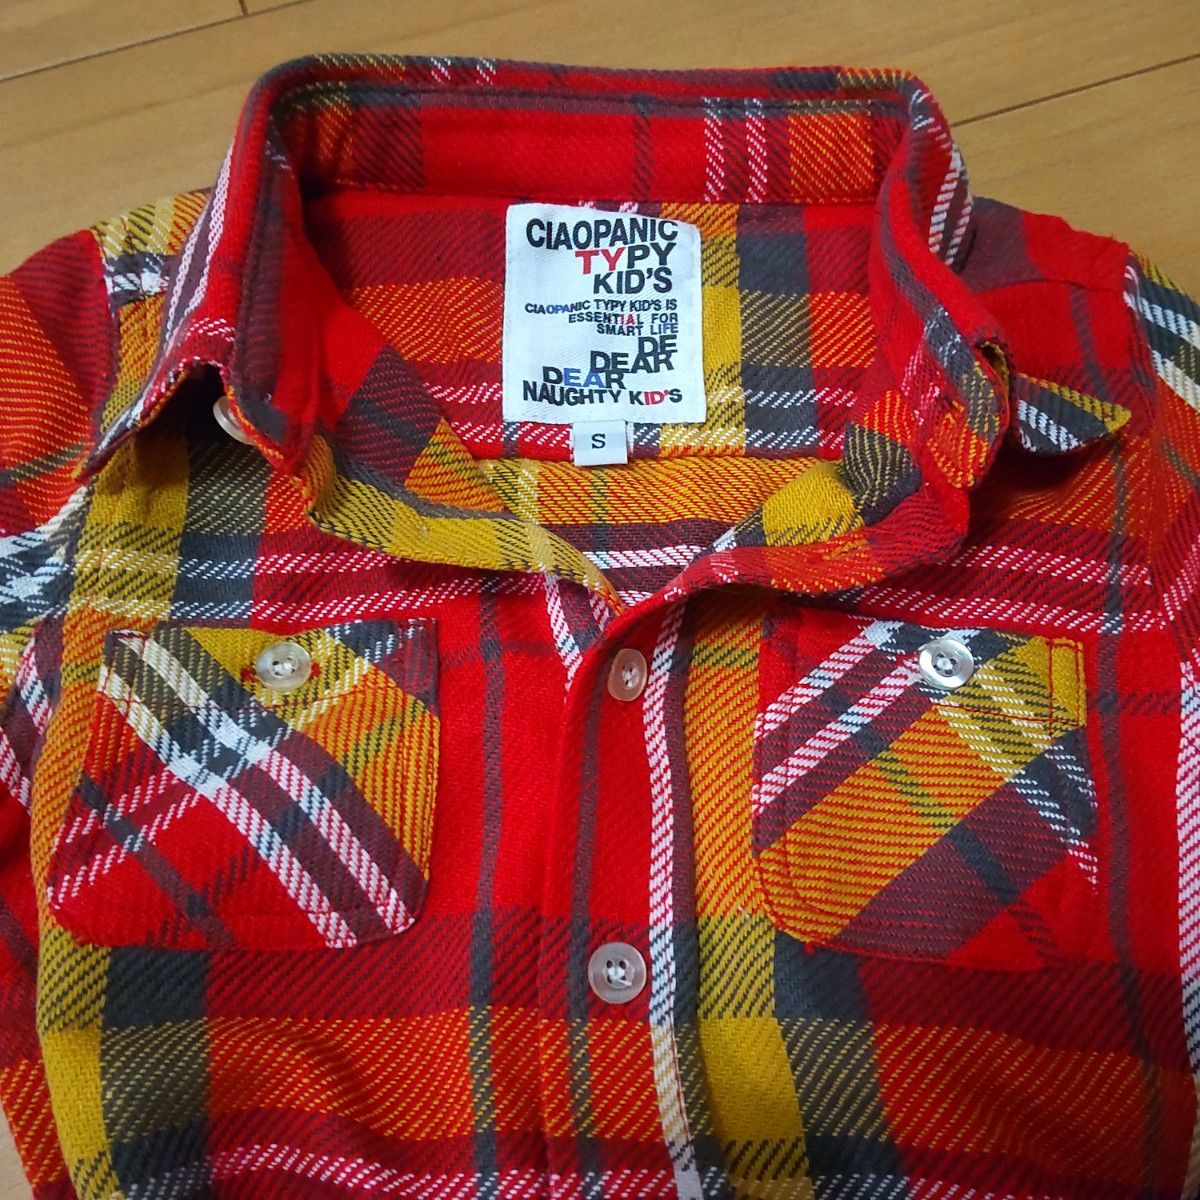 CIAOPANIC TYPY KID'S ベルト付きネルシャツ 赤系 XS S 2枚セット 未使用品